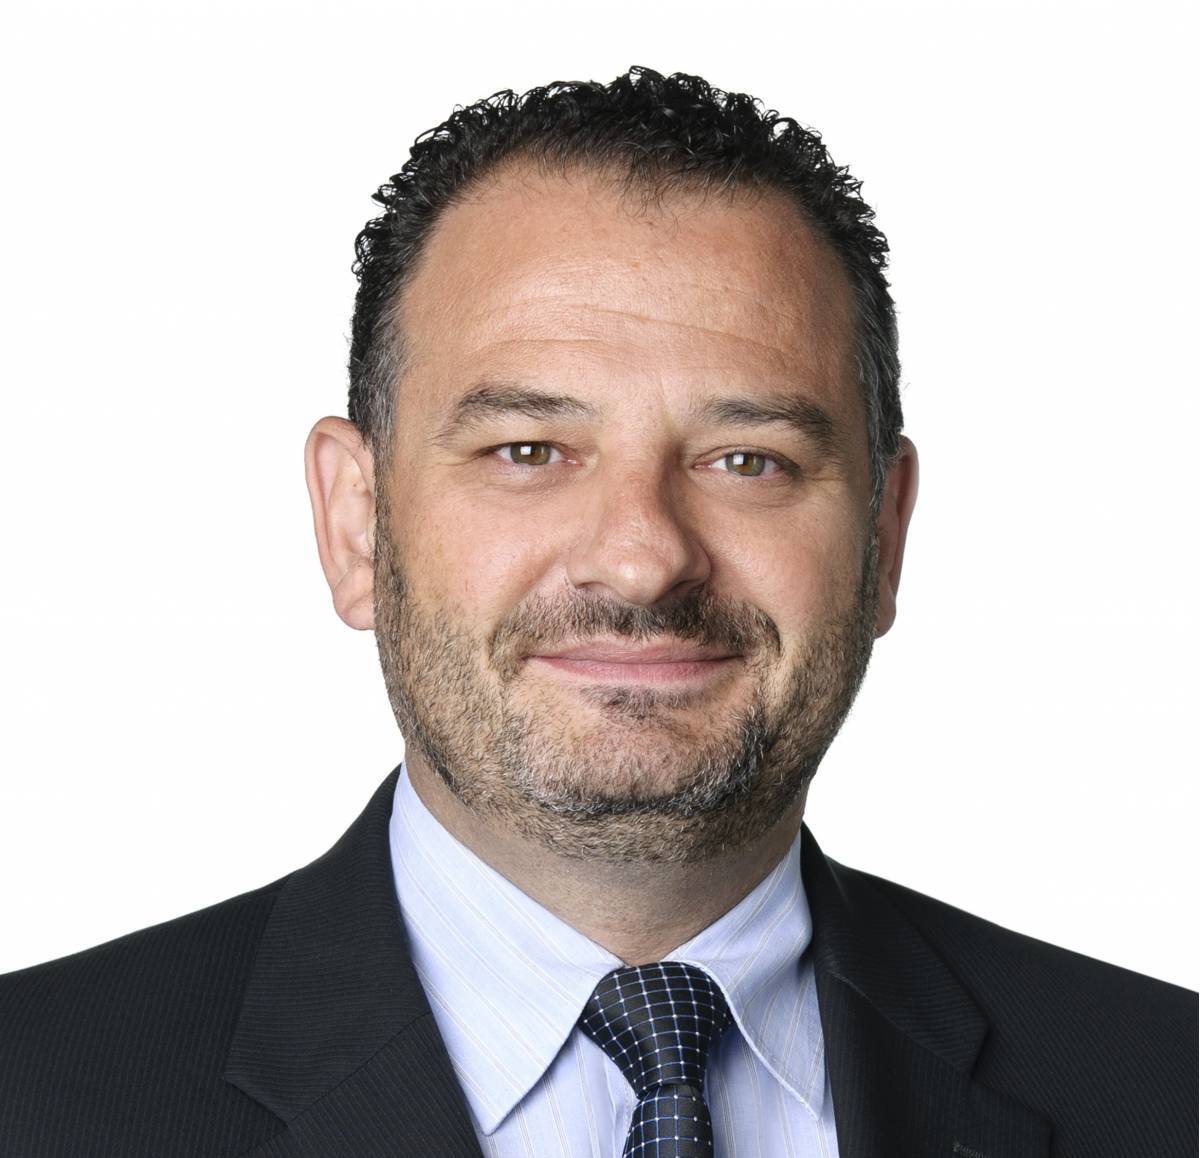 Fernando Guida ist neuer Managing Director Peugeot Schweiz